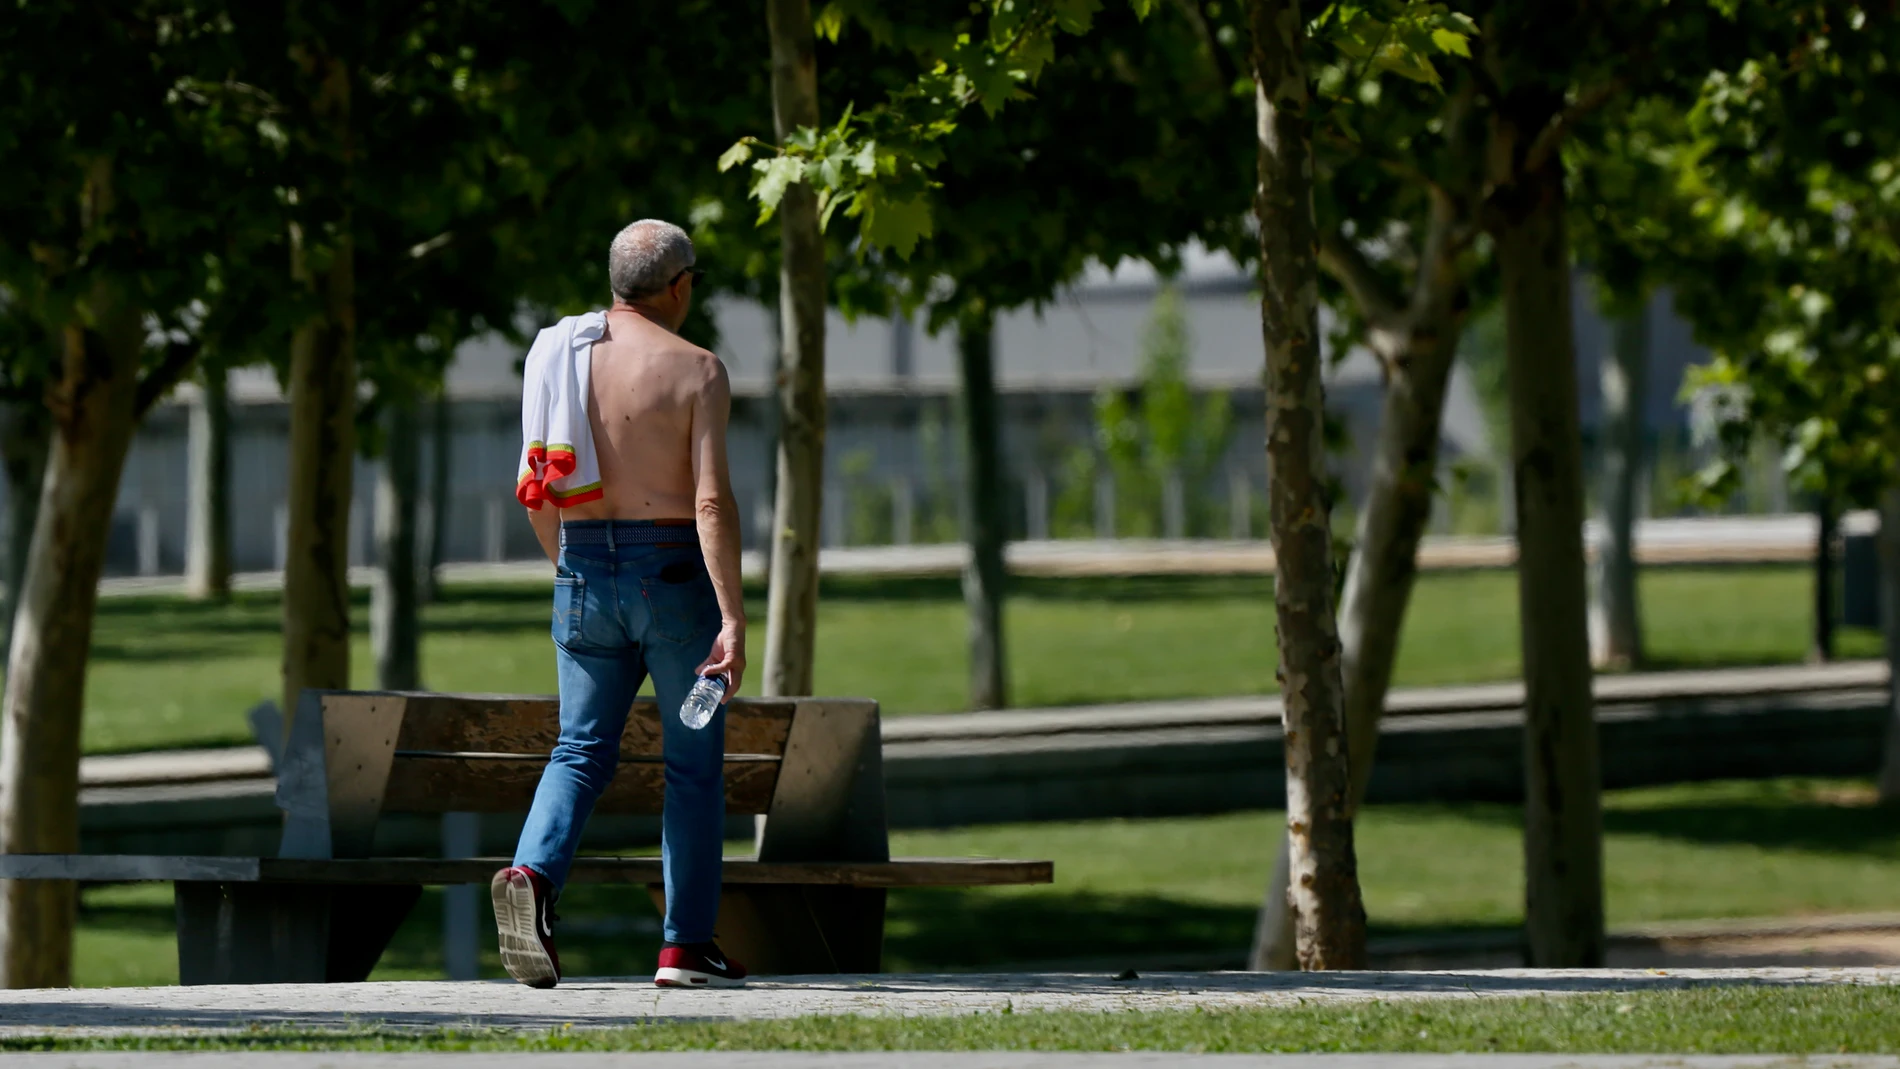 Un hombre camina sin camiseta el día en que España comenzará a sufrir un "importante" episodio cálido con temperaturas de pleno verano. Cézaro De Luca / Europa Press